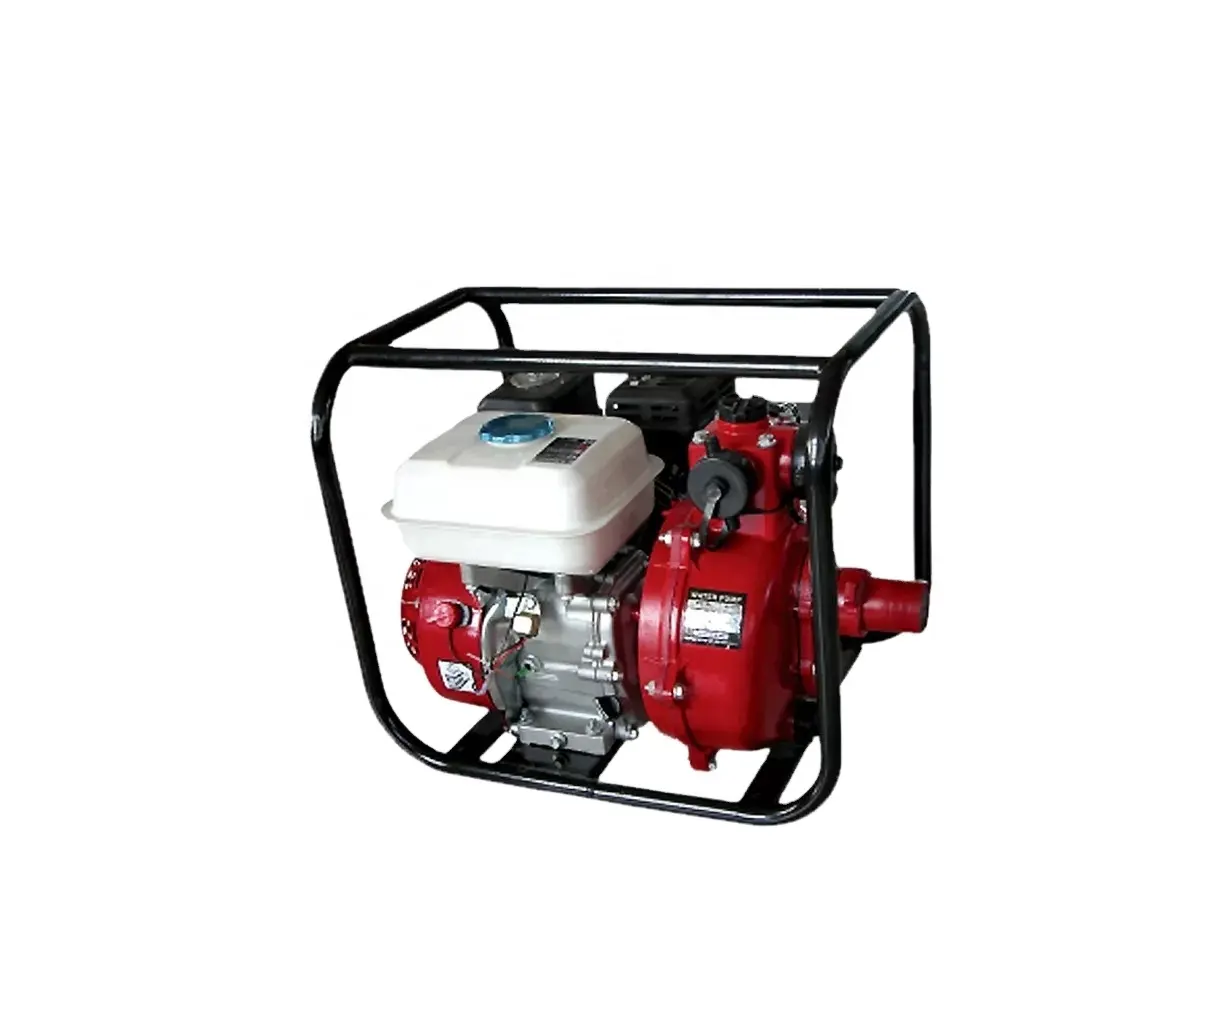 WENXIN 6.5HP Electric Water Pressure Pump 2 inch high pressure hand agricultural irrigation water pump